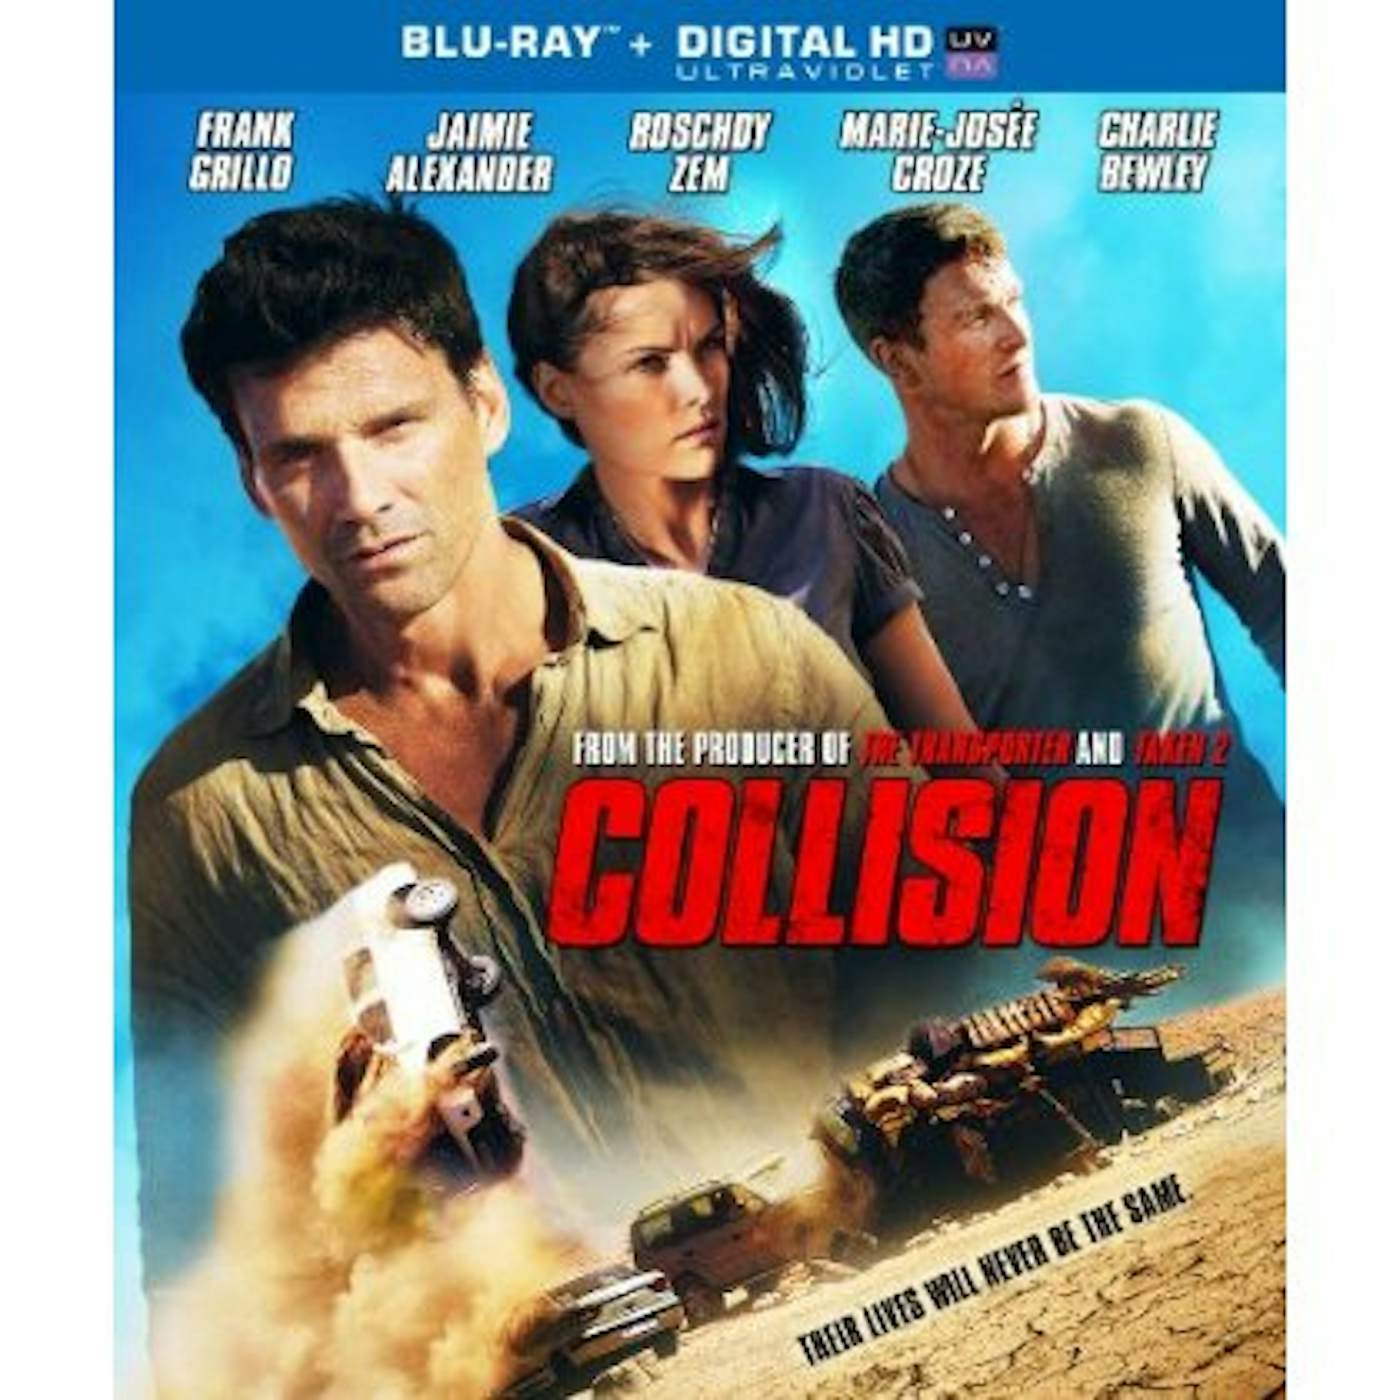 The Collision Blu-ray